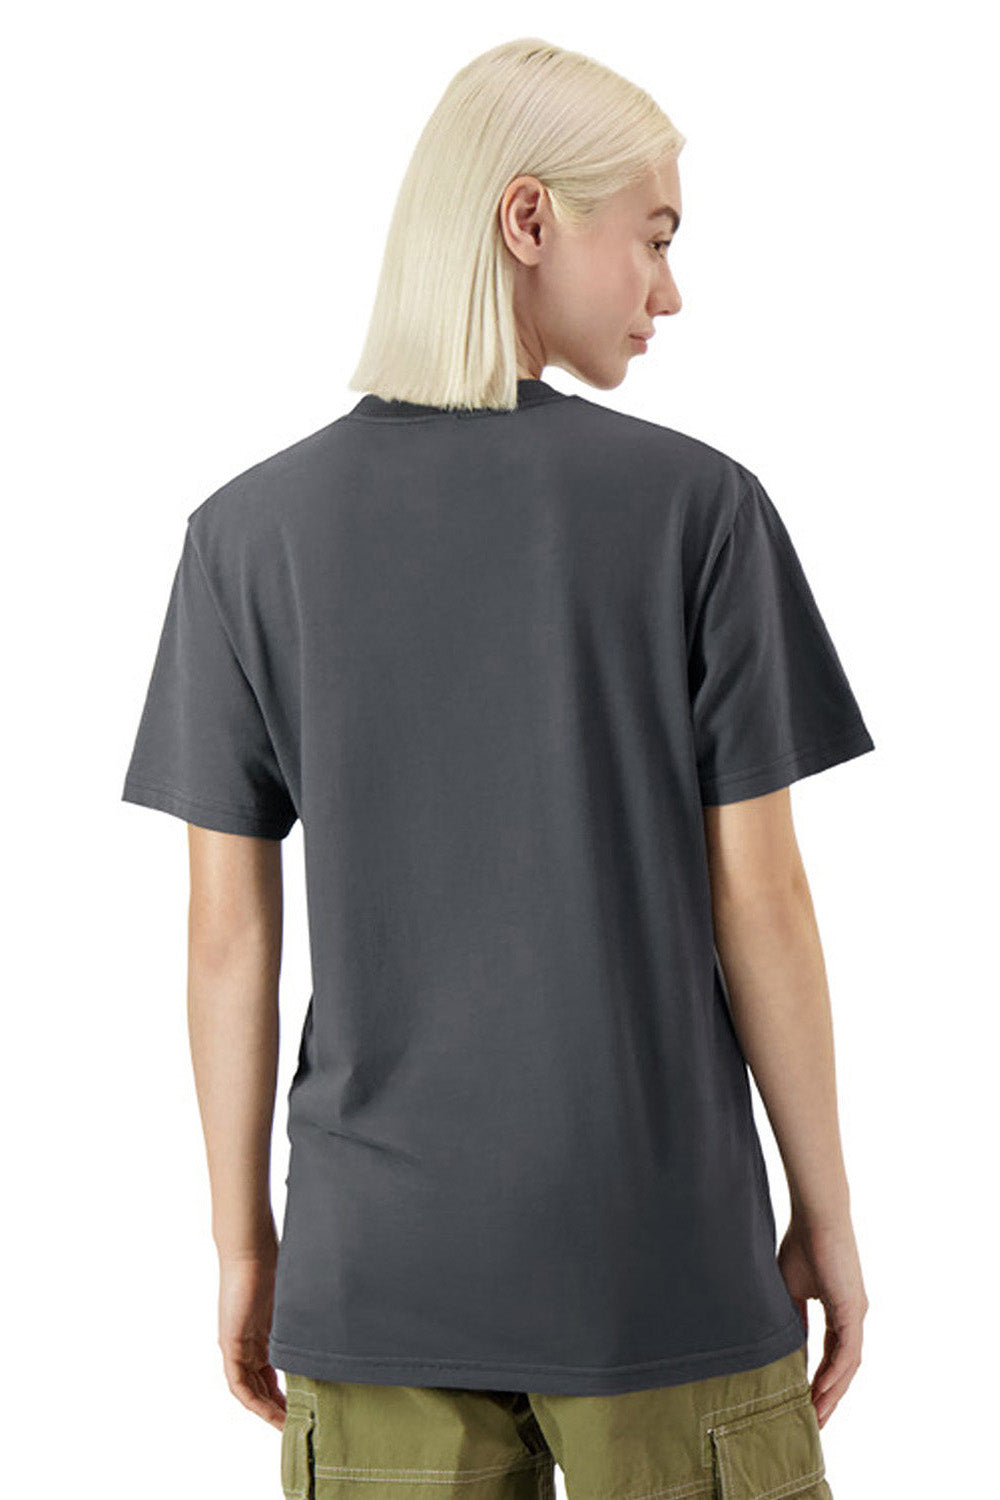 American Apparel 5389 Mens Sueded Cloud Short Sleeve Crewneck T-Shirt Asphalt Grey Model Back